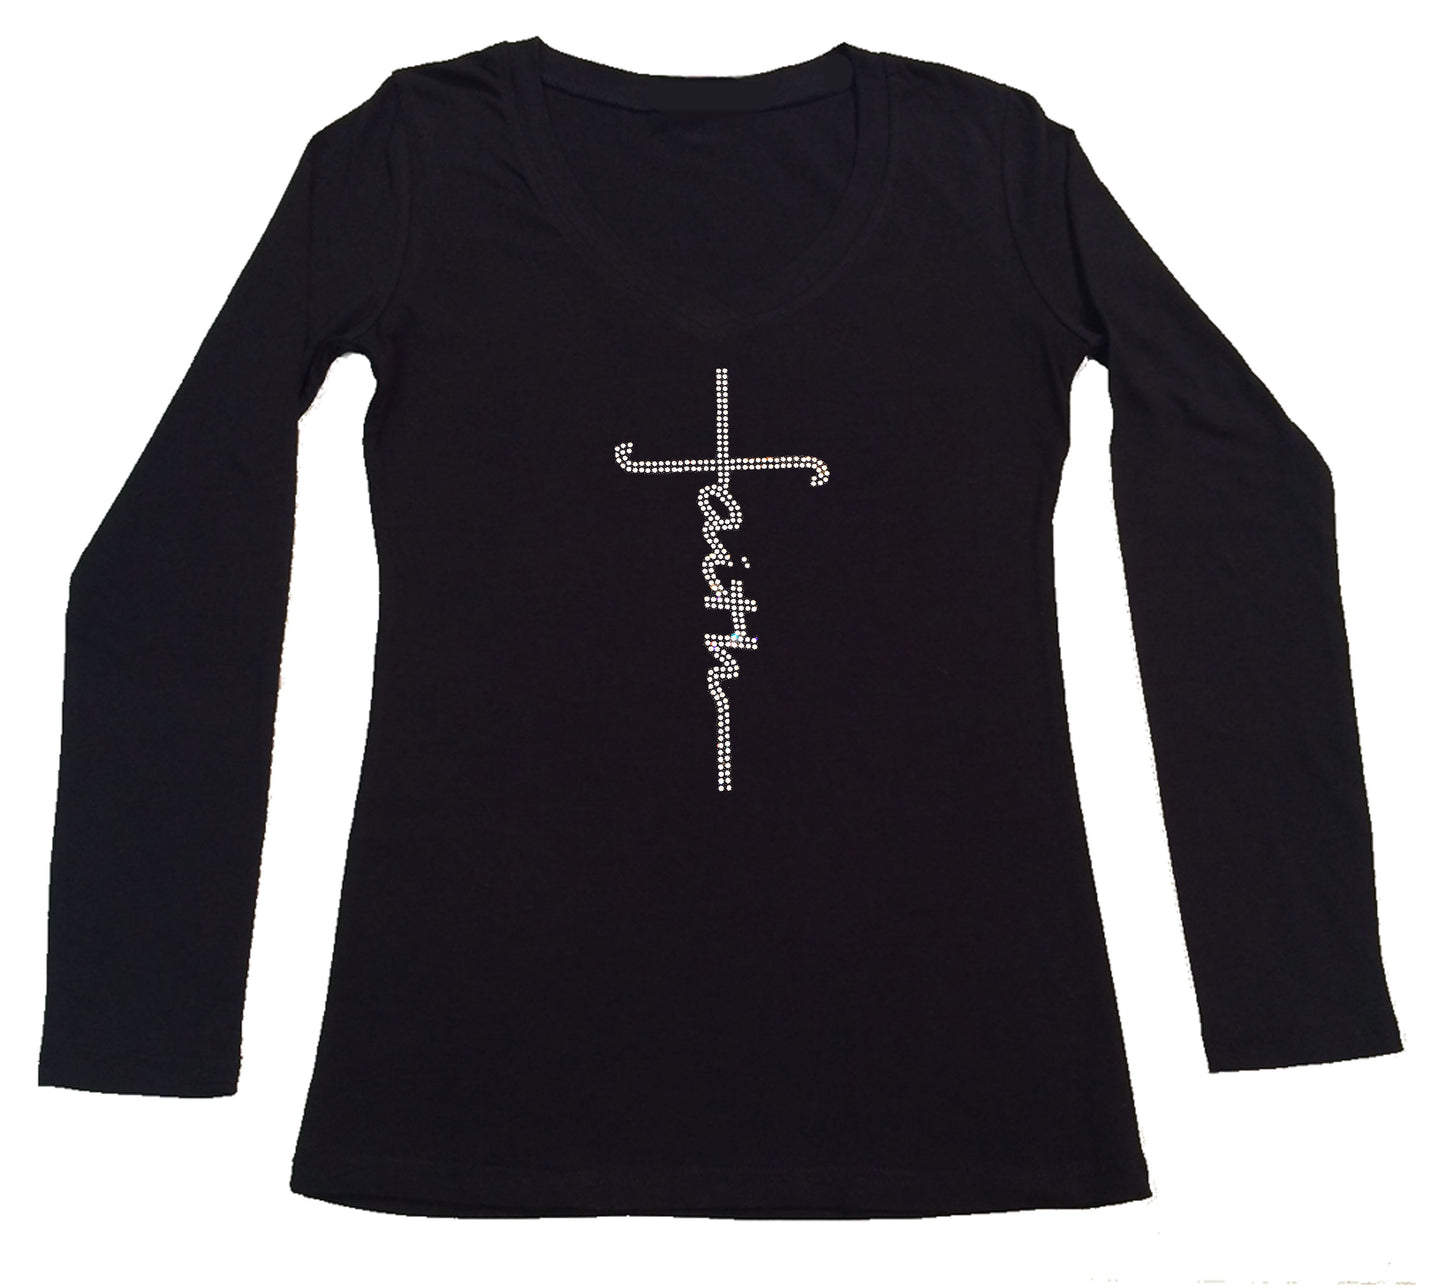 Womens T-shirt with Faith Script Cross in Rhinestones